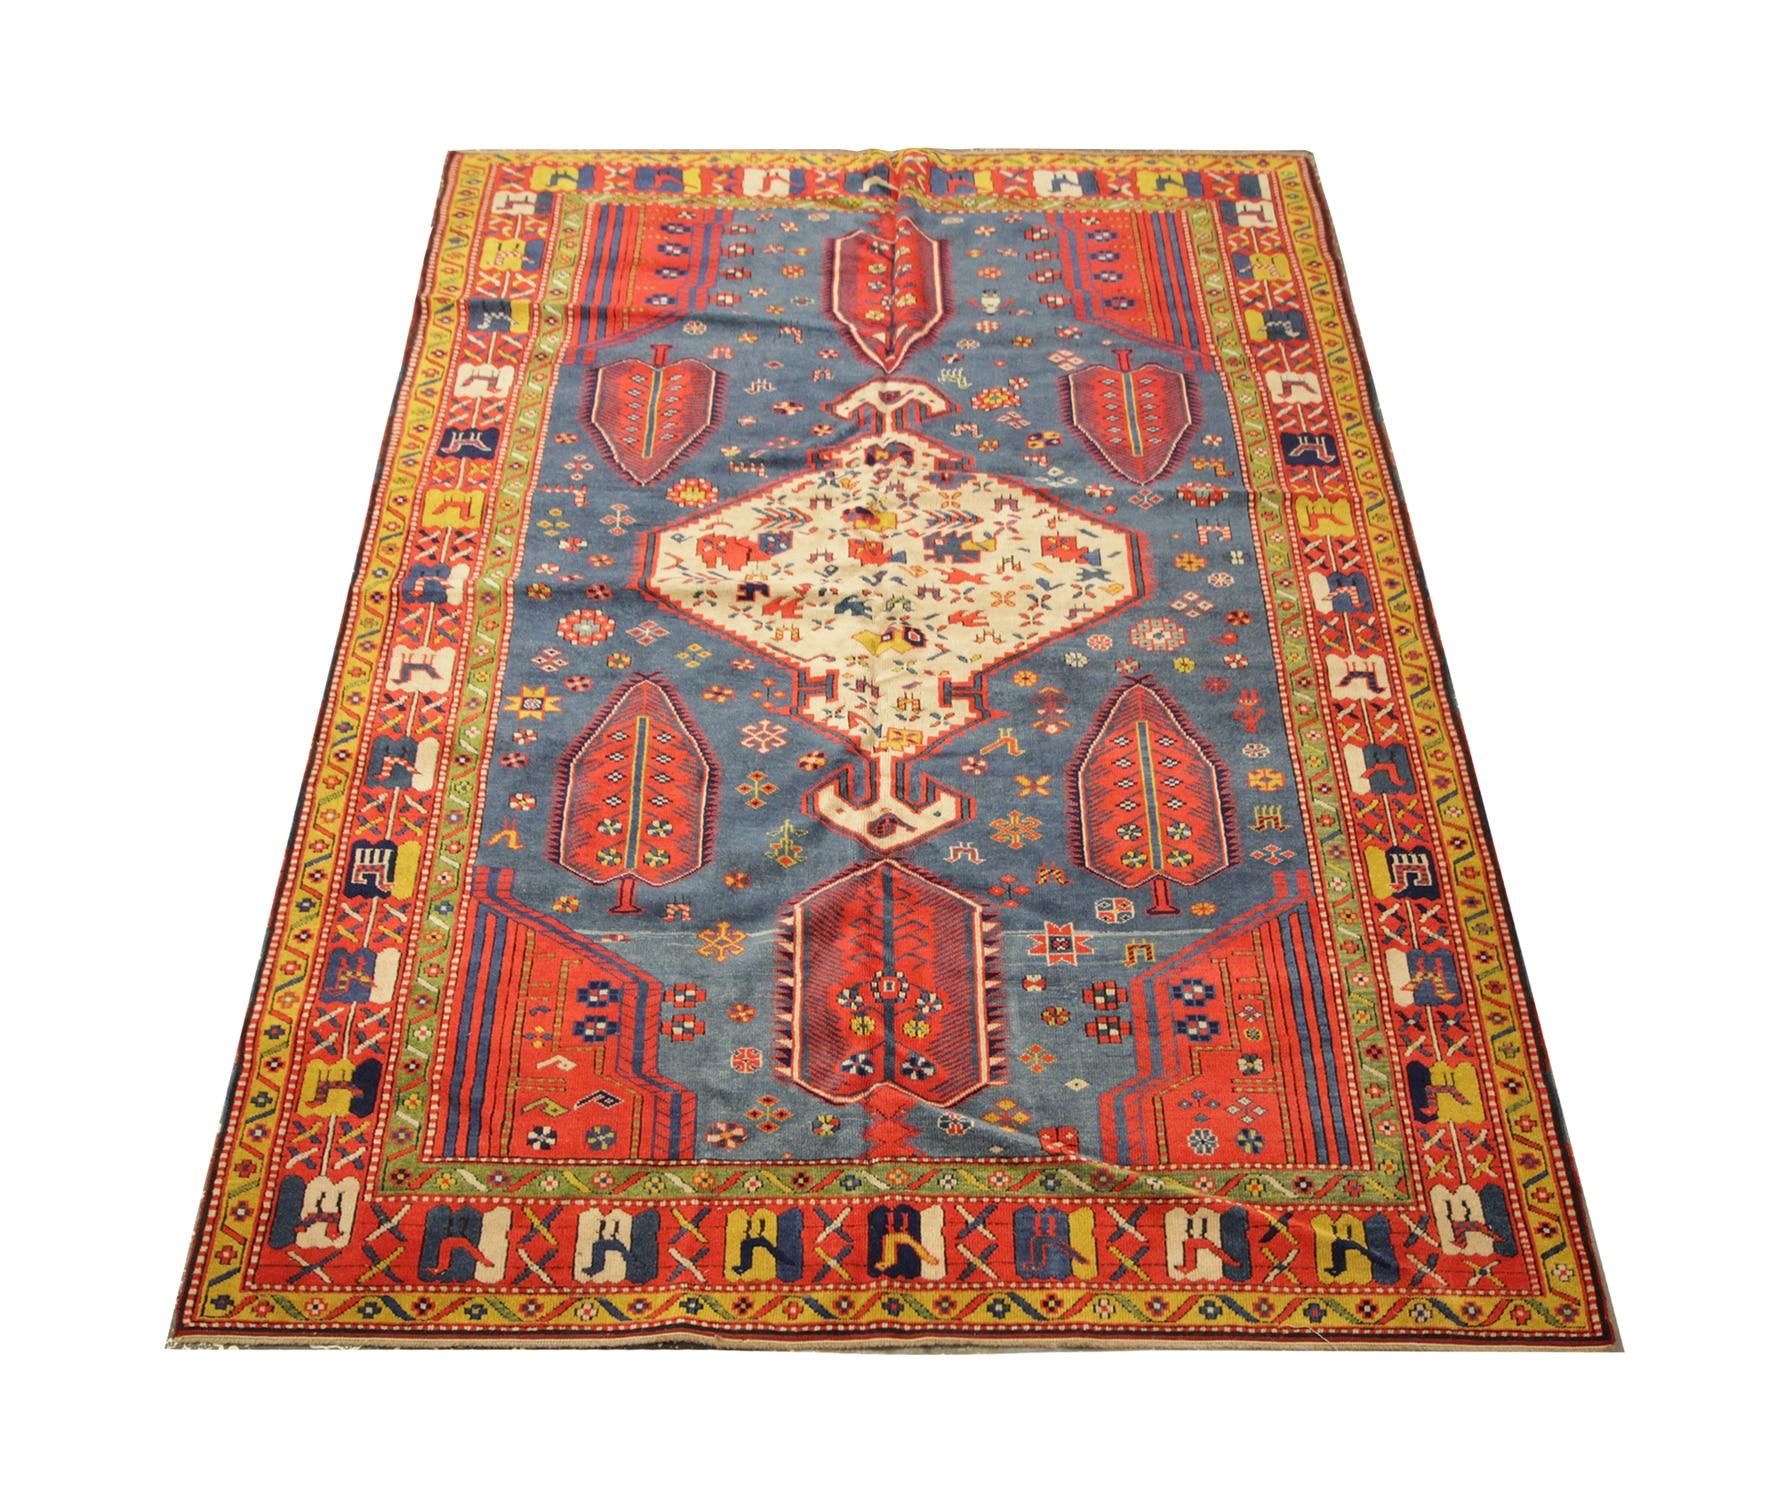 Cotton Antique Caucasian Karabagh Carpet Handmade Tribal Rustic Wool Rug for Sale For Sale